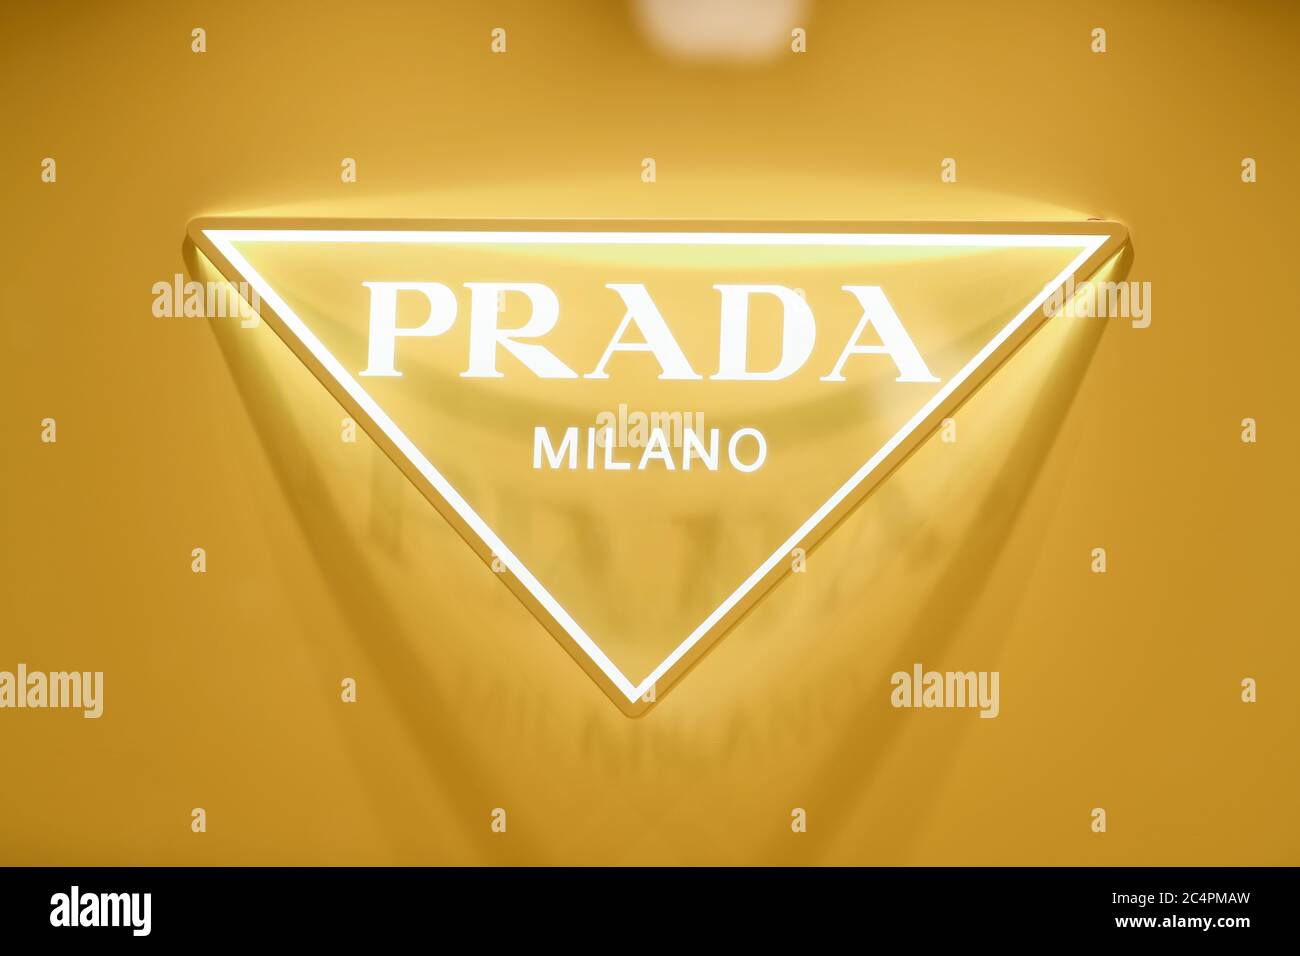 Prada logo hi-res stock photography and images - Alamy